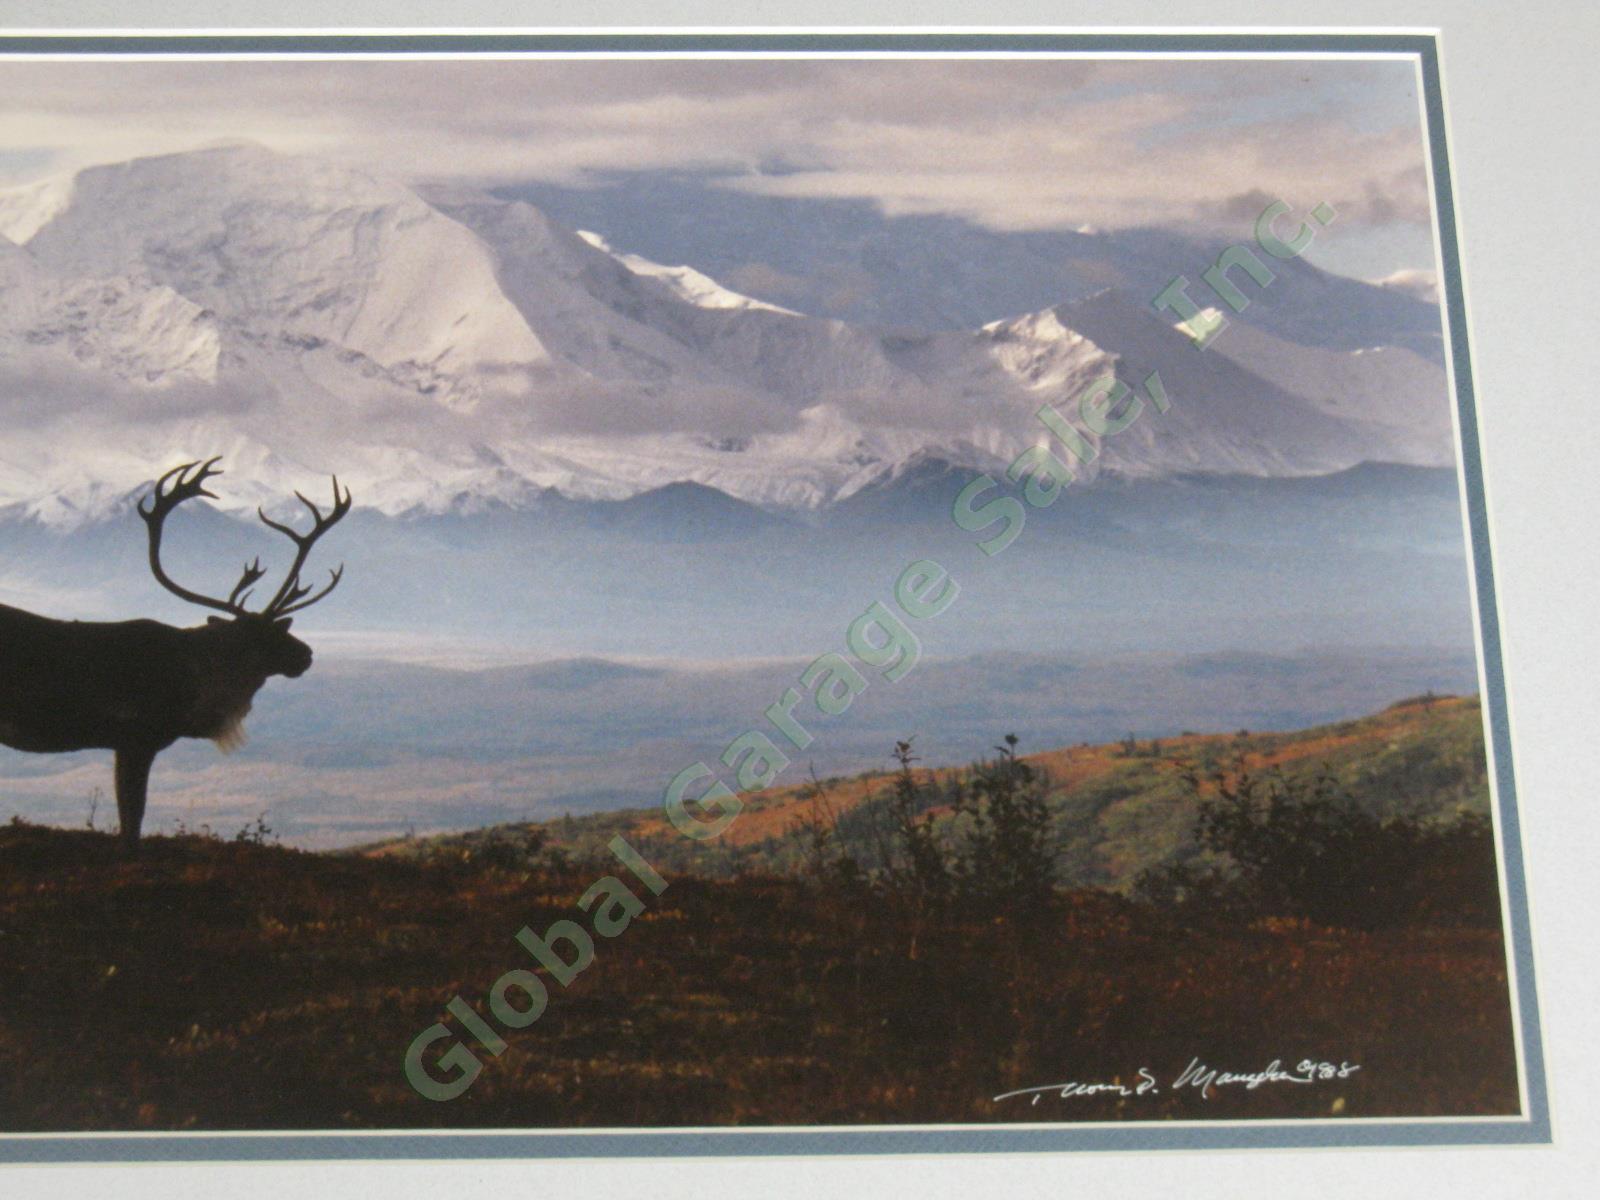 Rare 1988 Thomas Mangelsen Signed Photograph Caribou Country Mt McKinley Alaska 3